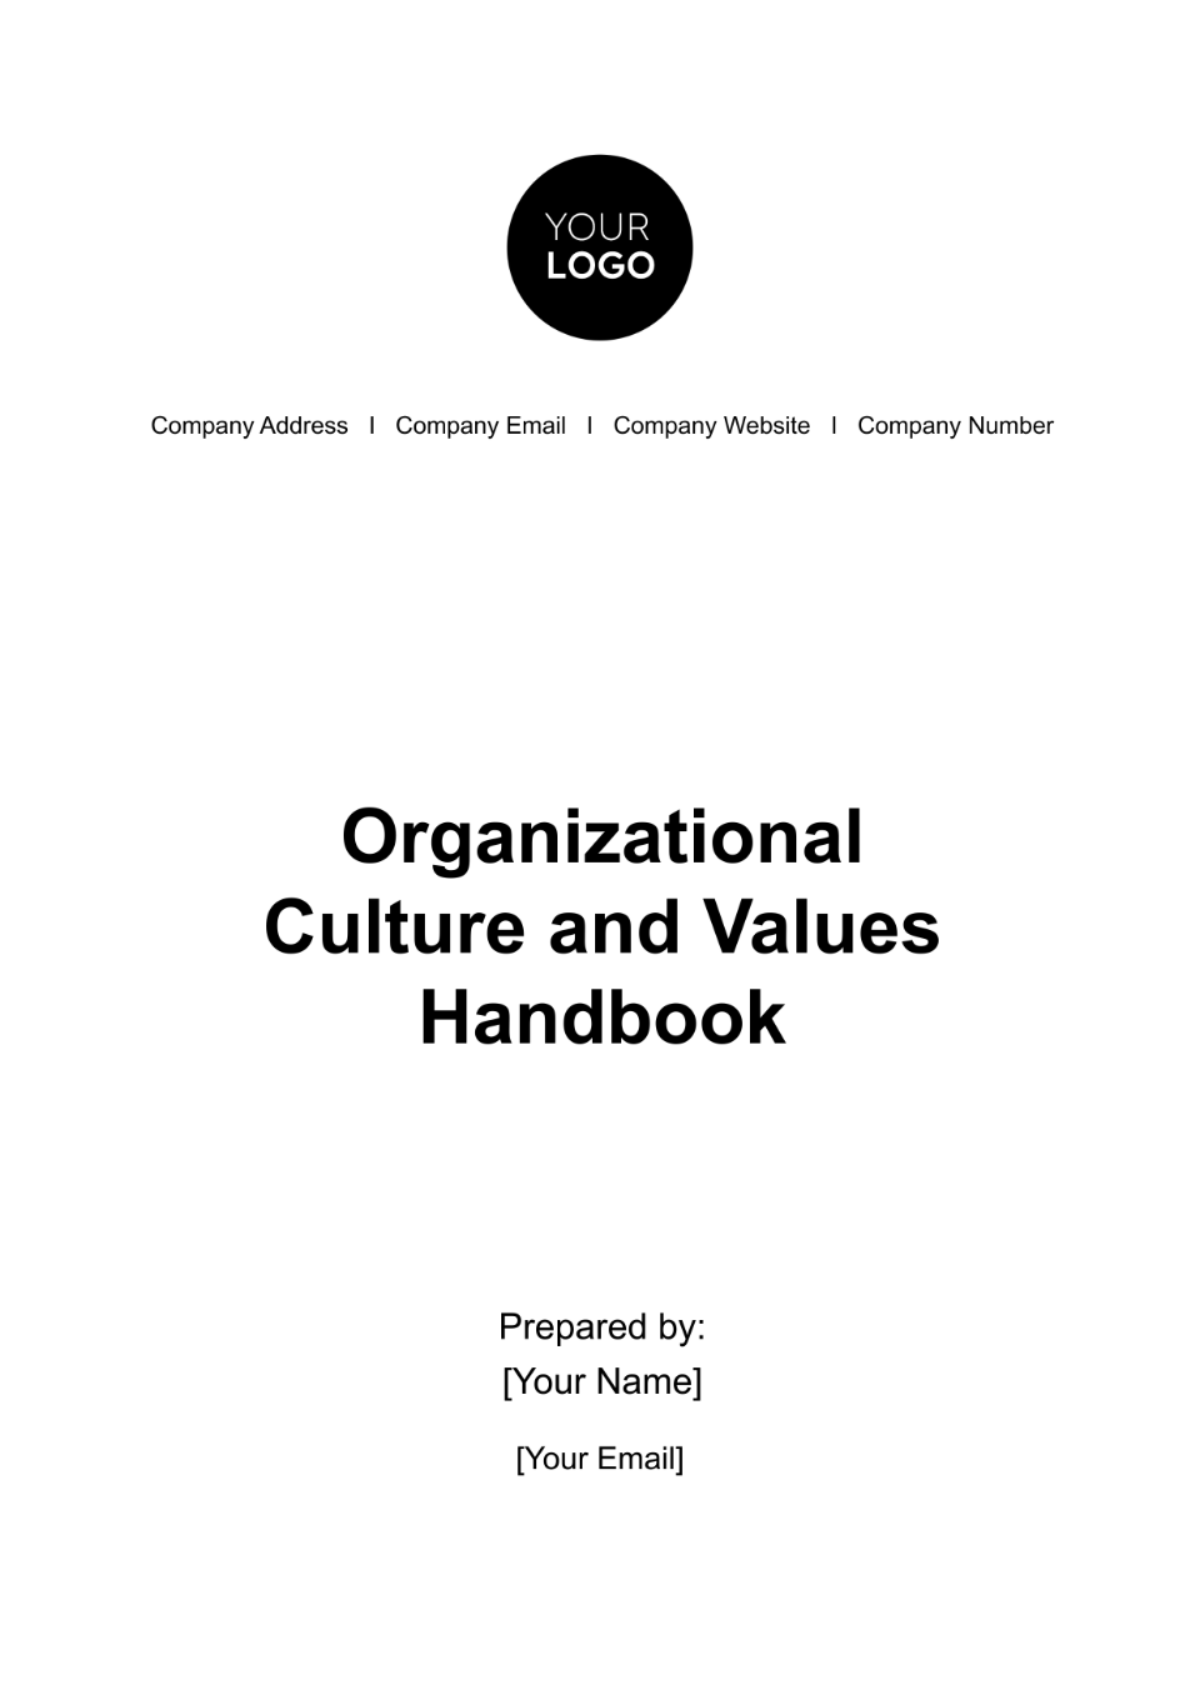 Organizational Culture and Values Handbook HR Template